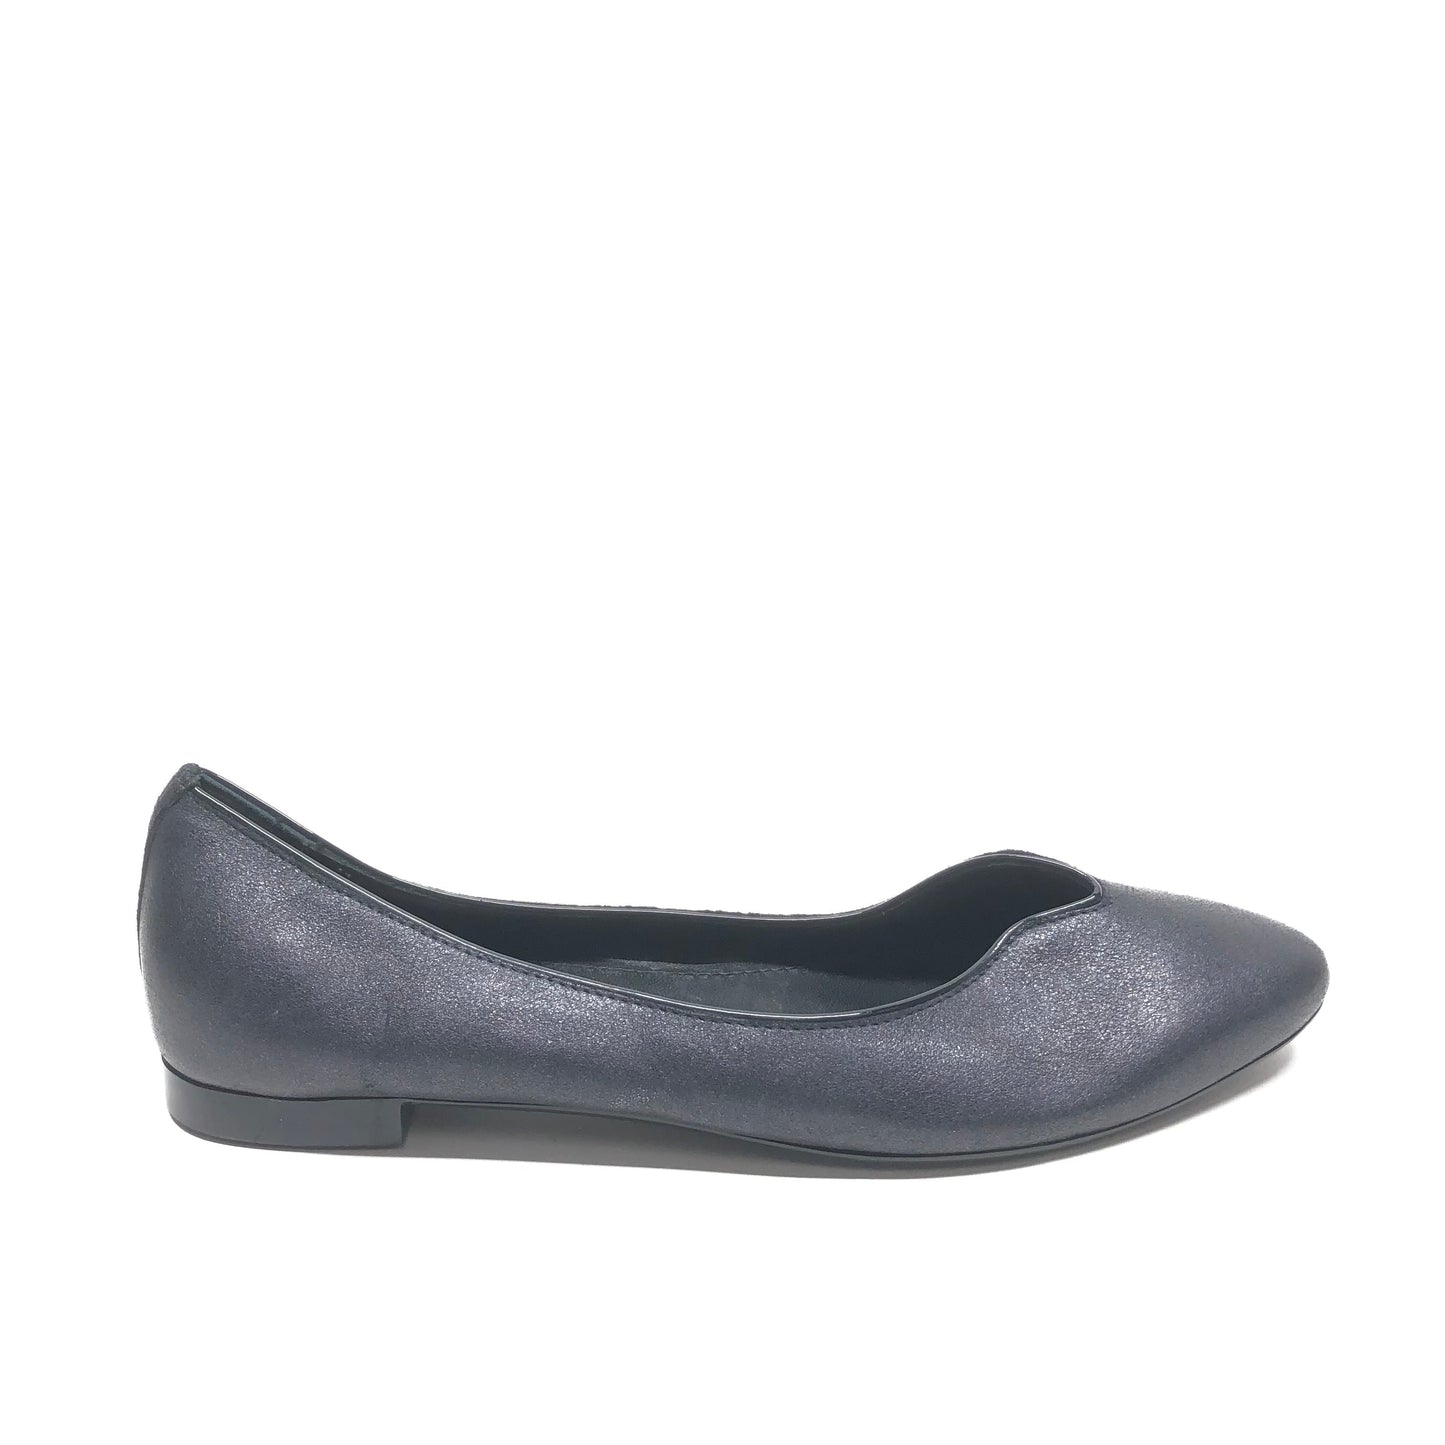 Black Shoes Flats Agl, Size 7.5